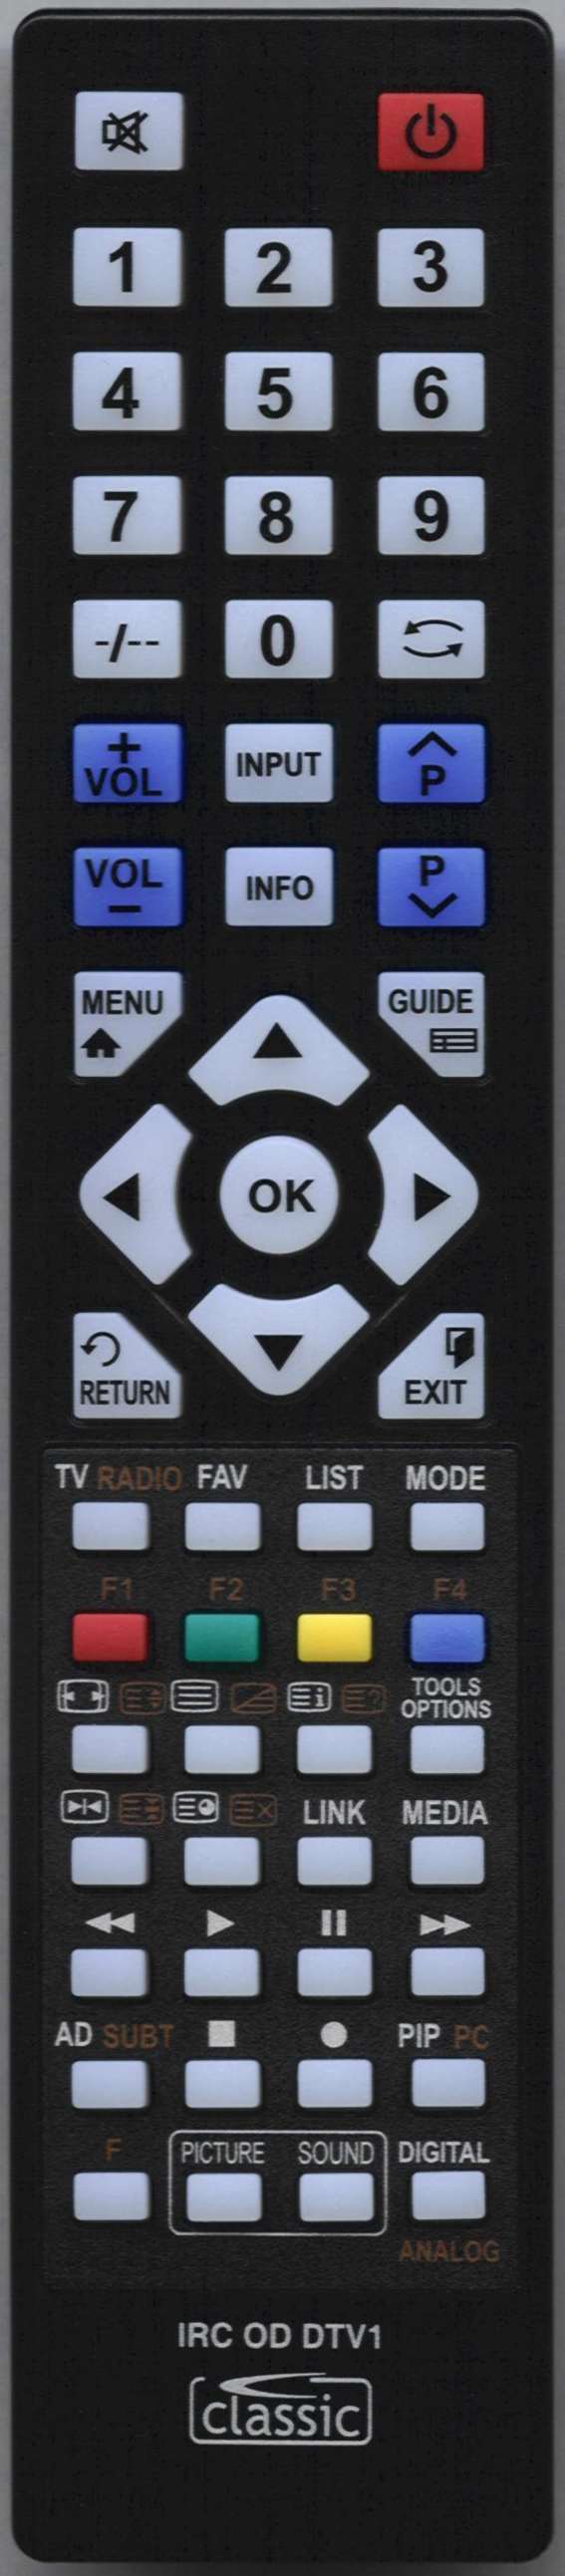 Samsung AA59-00104C Remote Control